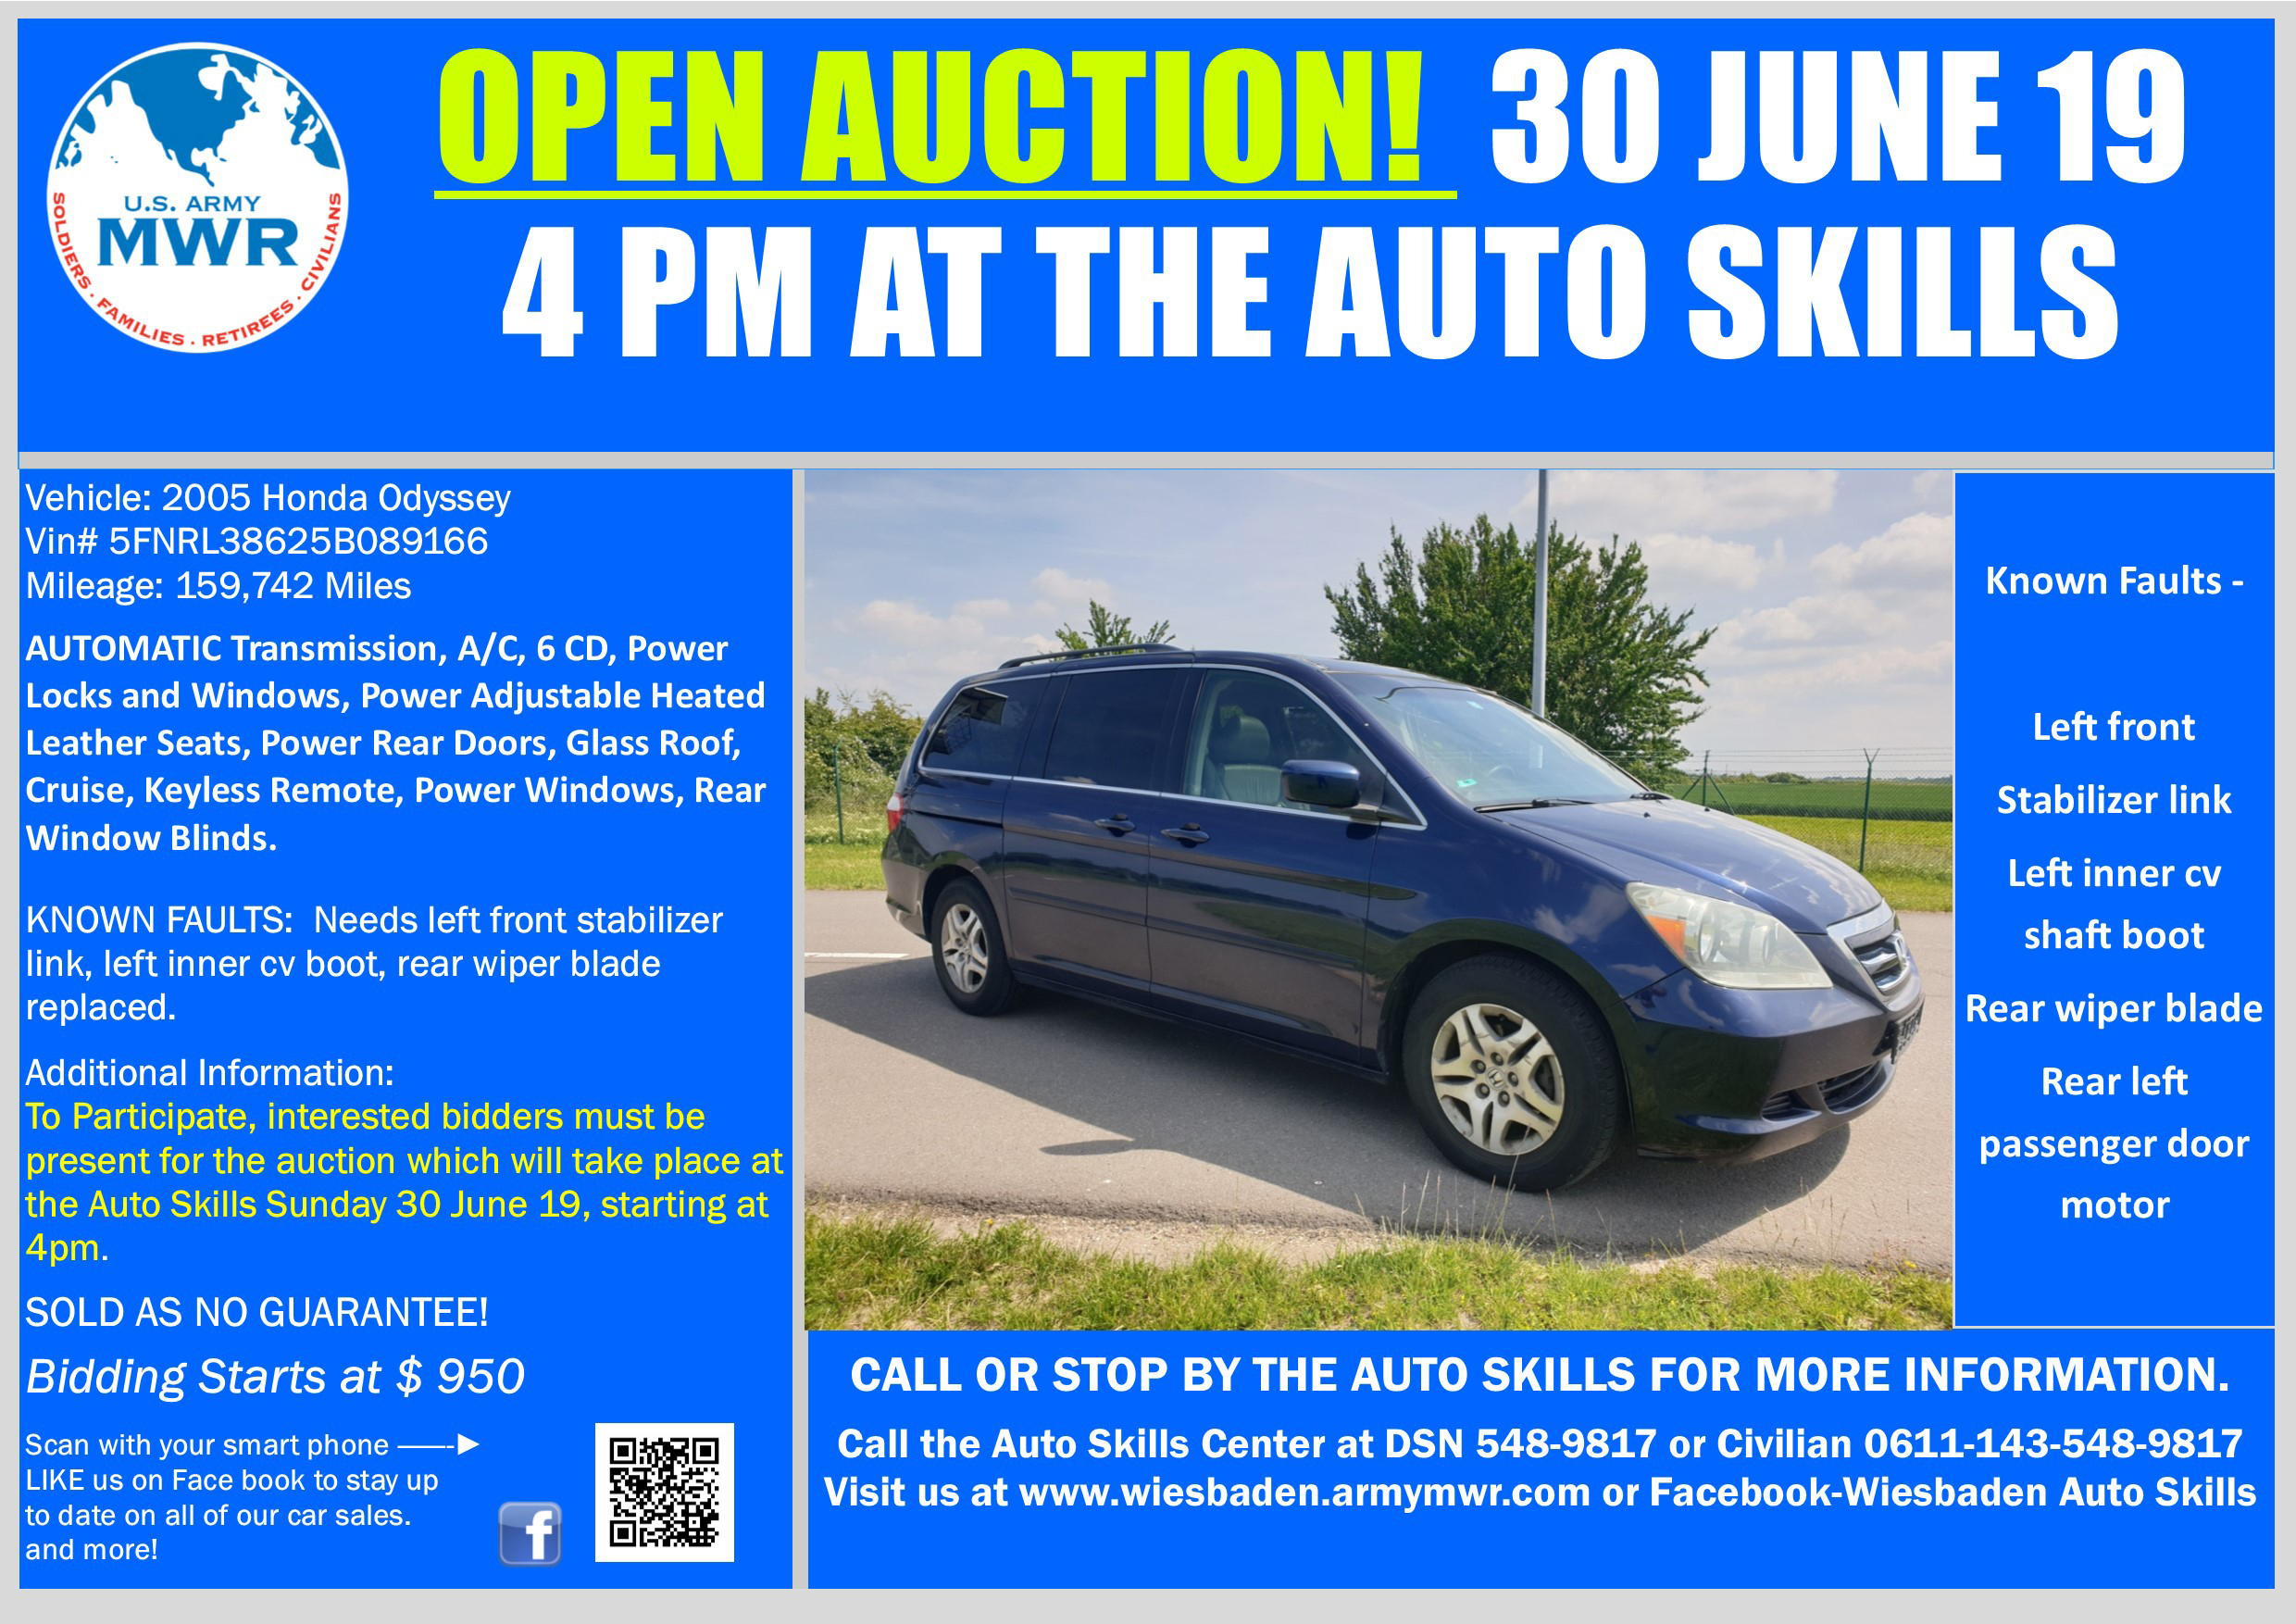 Sale Honda Ody 30 June 19 Open Auction.jpg